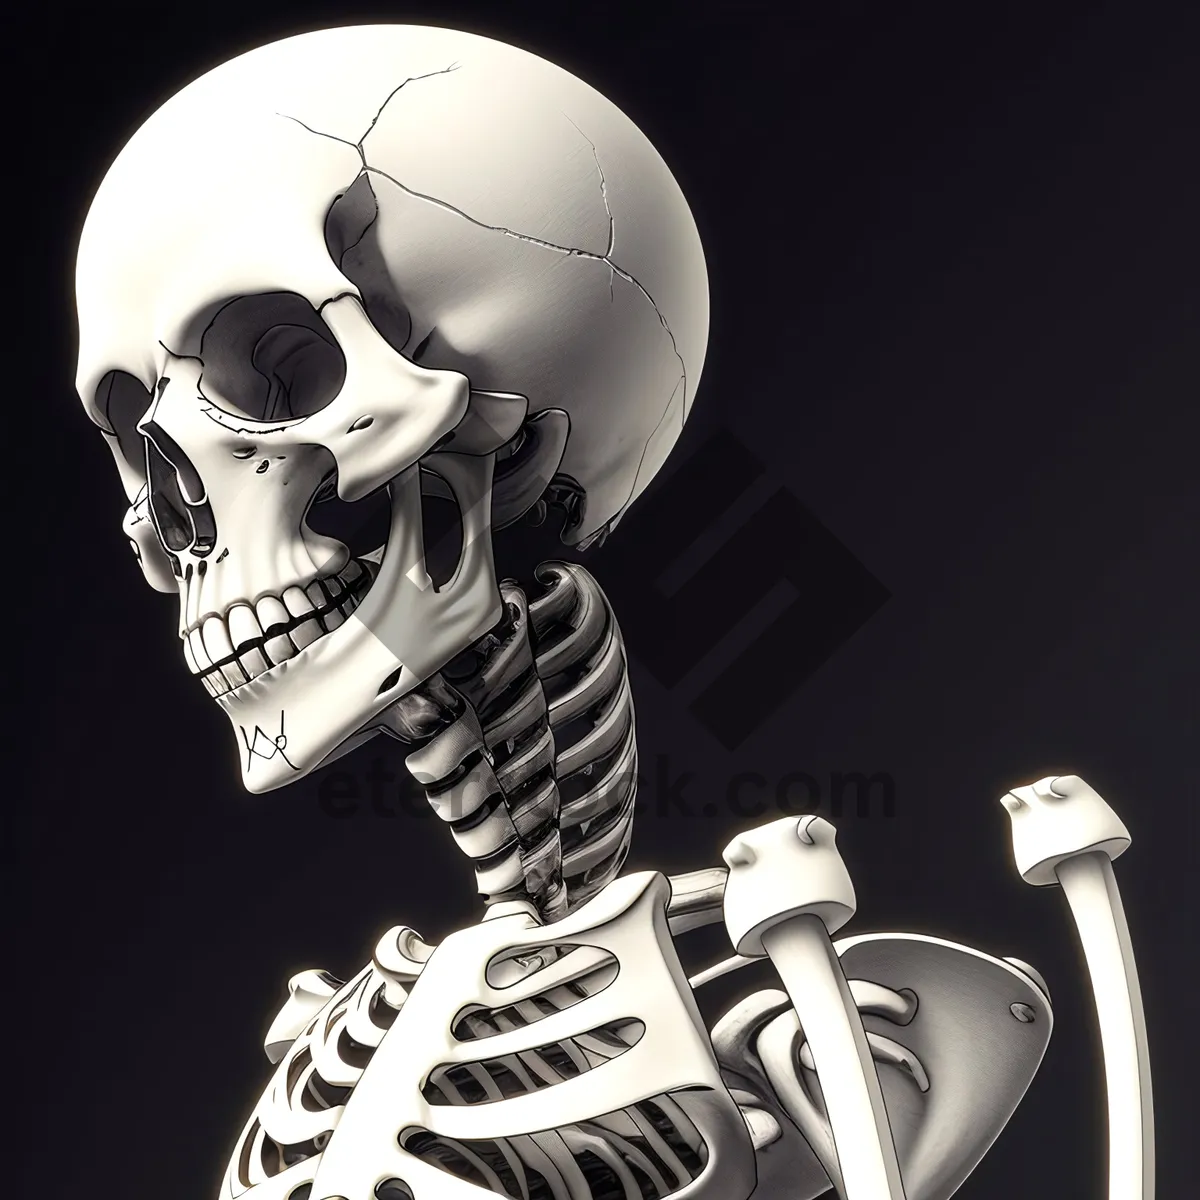 Picture of Skeletal Death Bust with Frightening Helmet Headdress